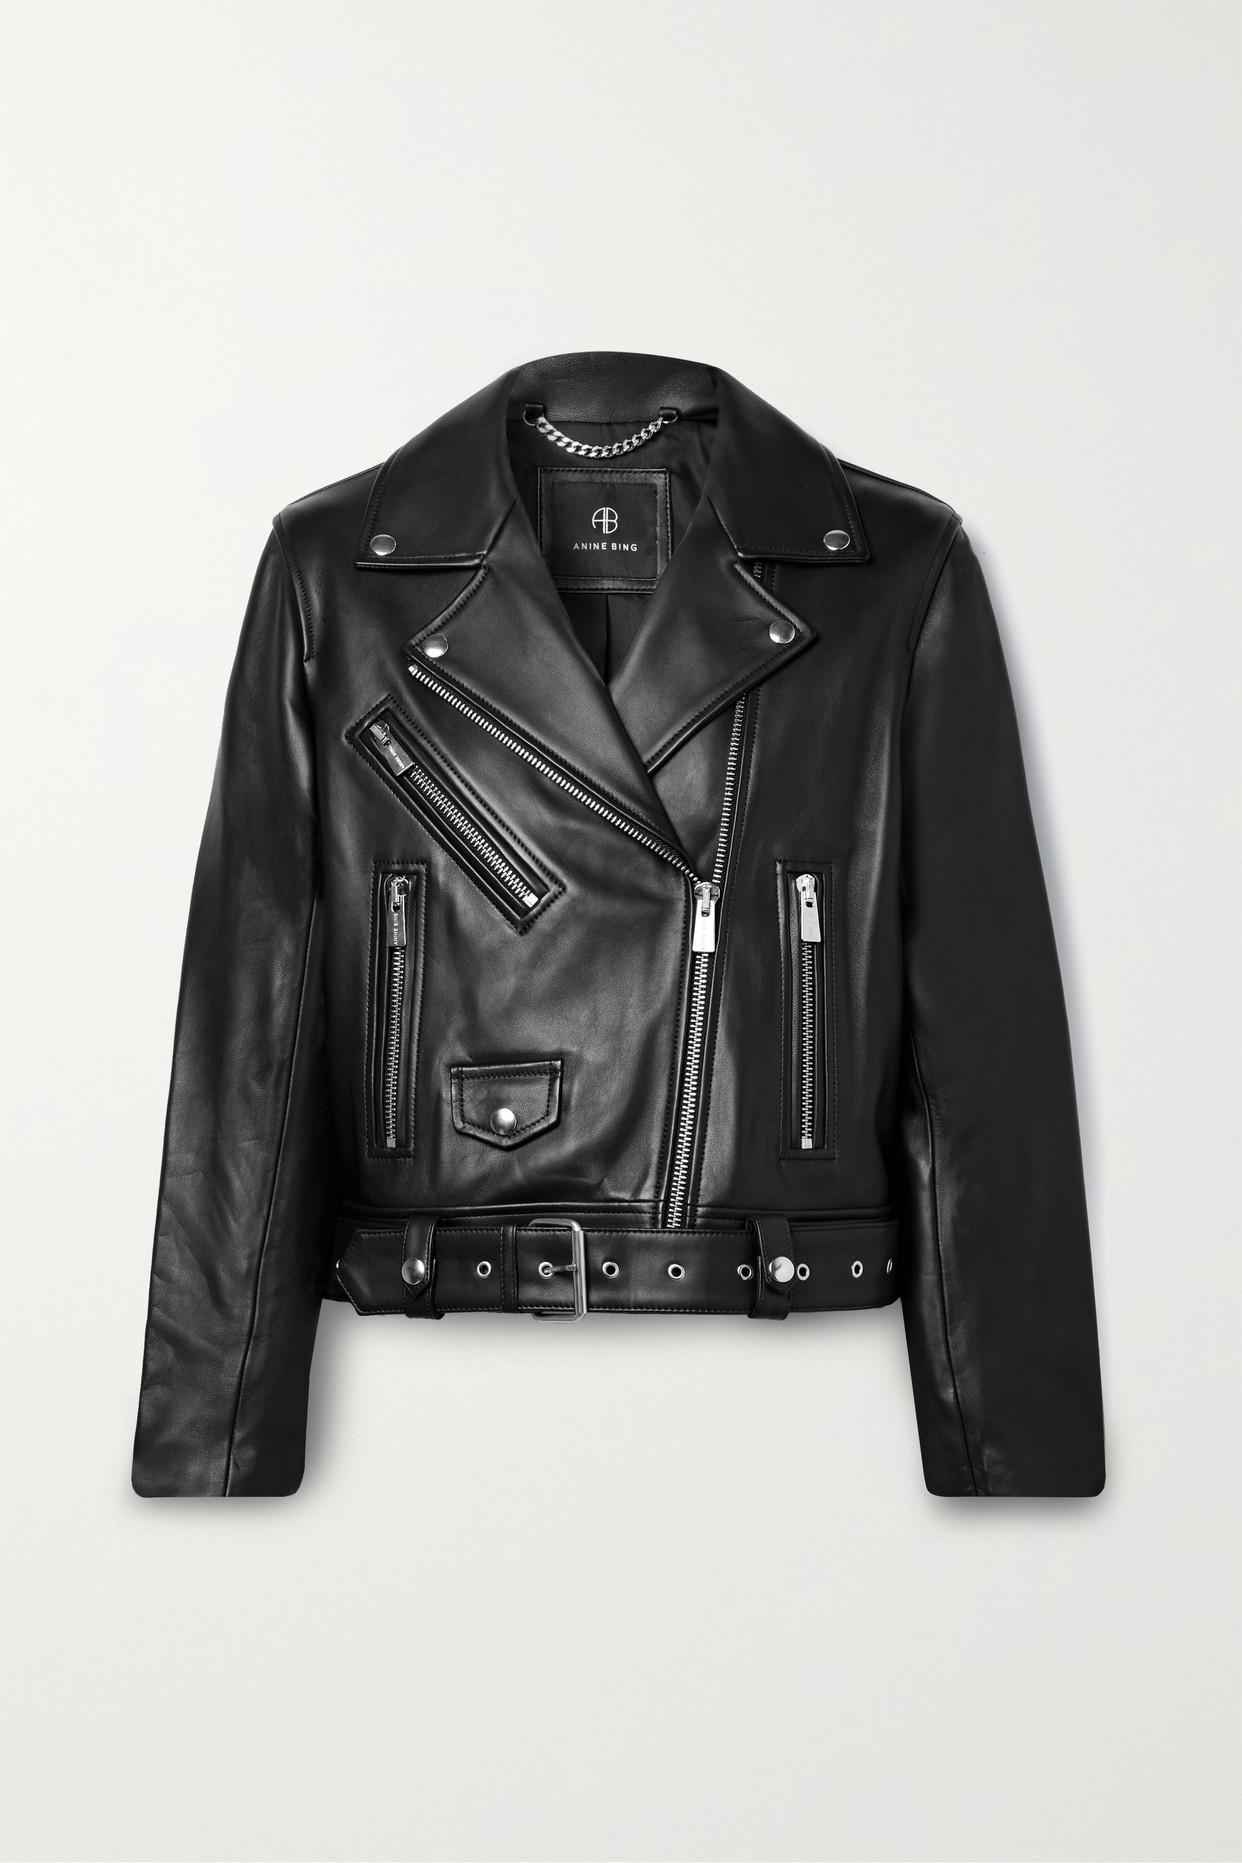 Anine Bing Benjamin Leather Biker Jacket in Black | Lyst